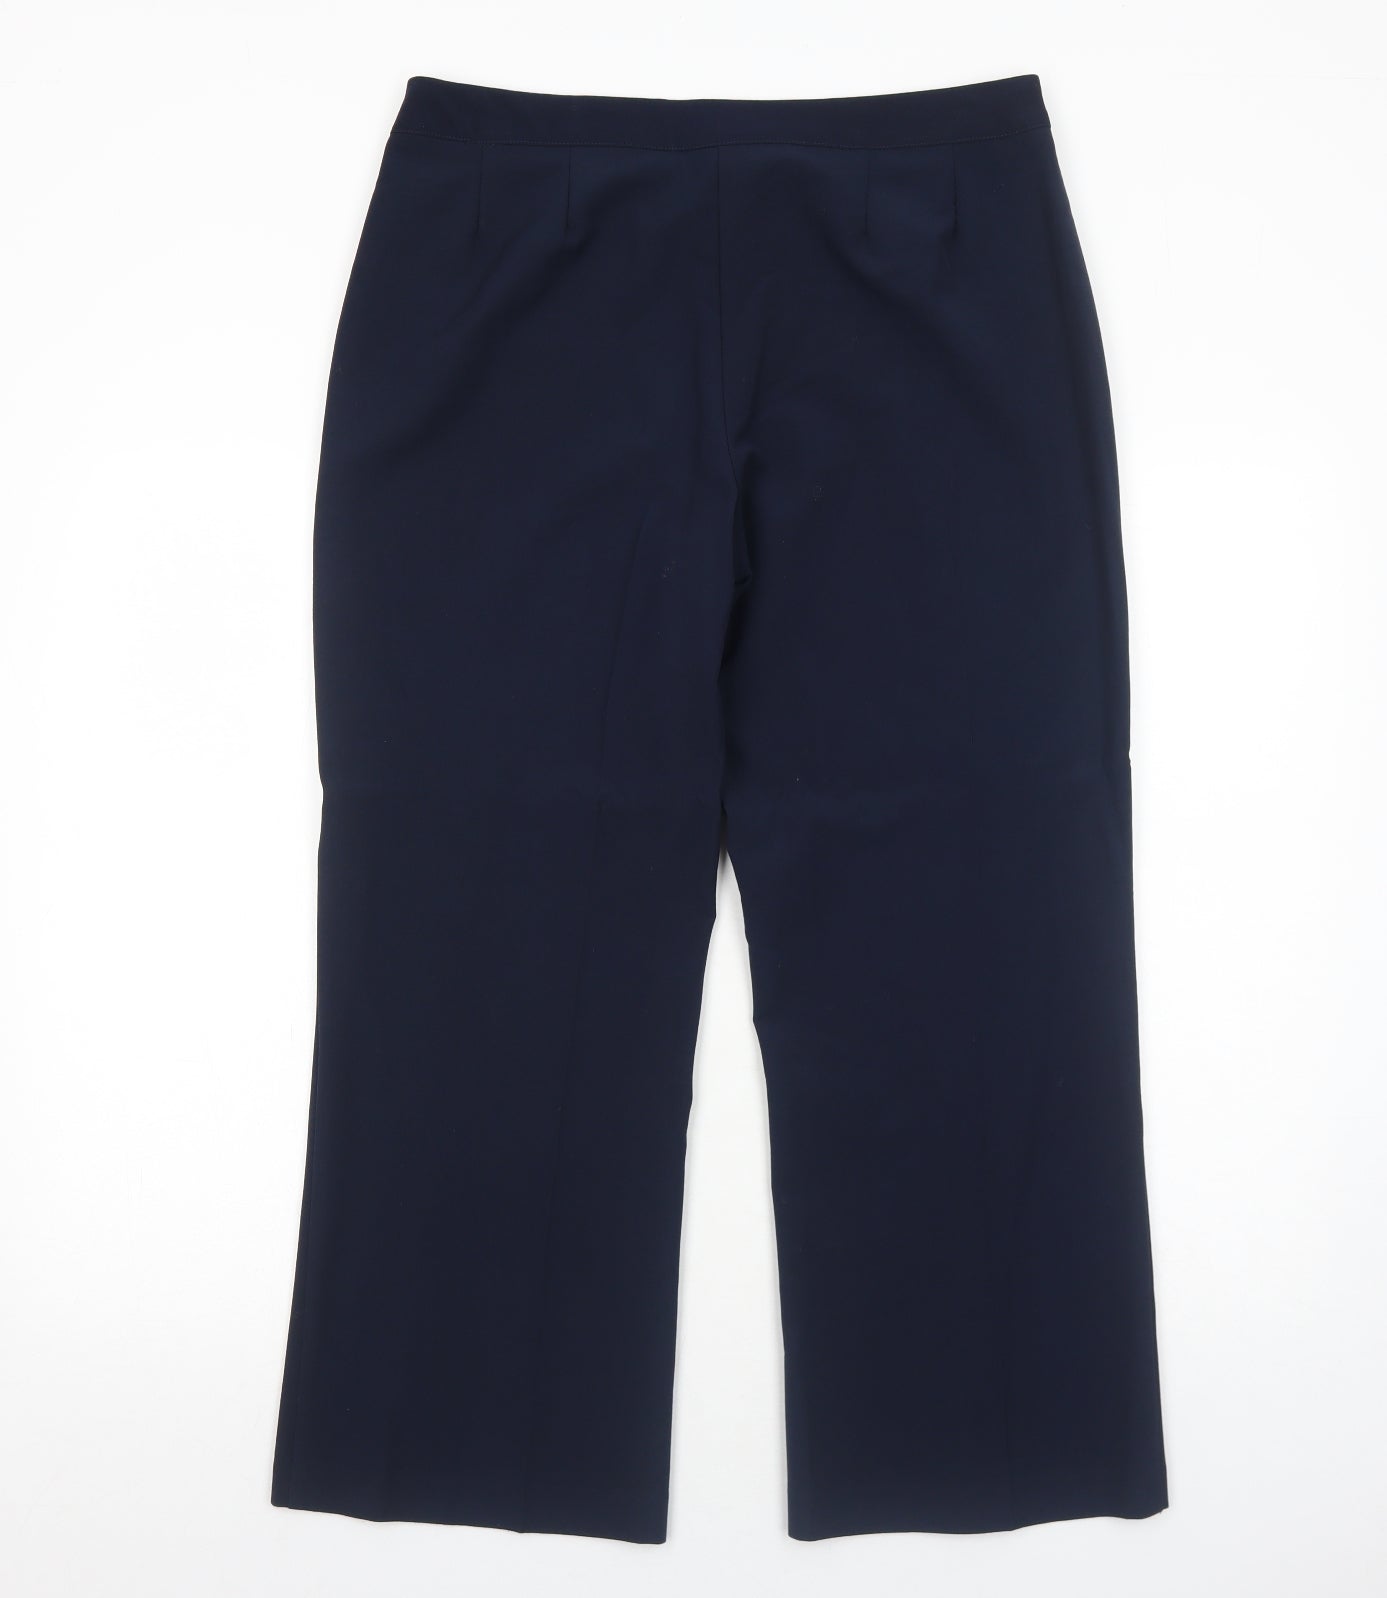 Mia Moda Womens Blue Polyester Dress Pants Trousers Size 14 Regular Zip